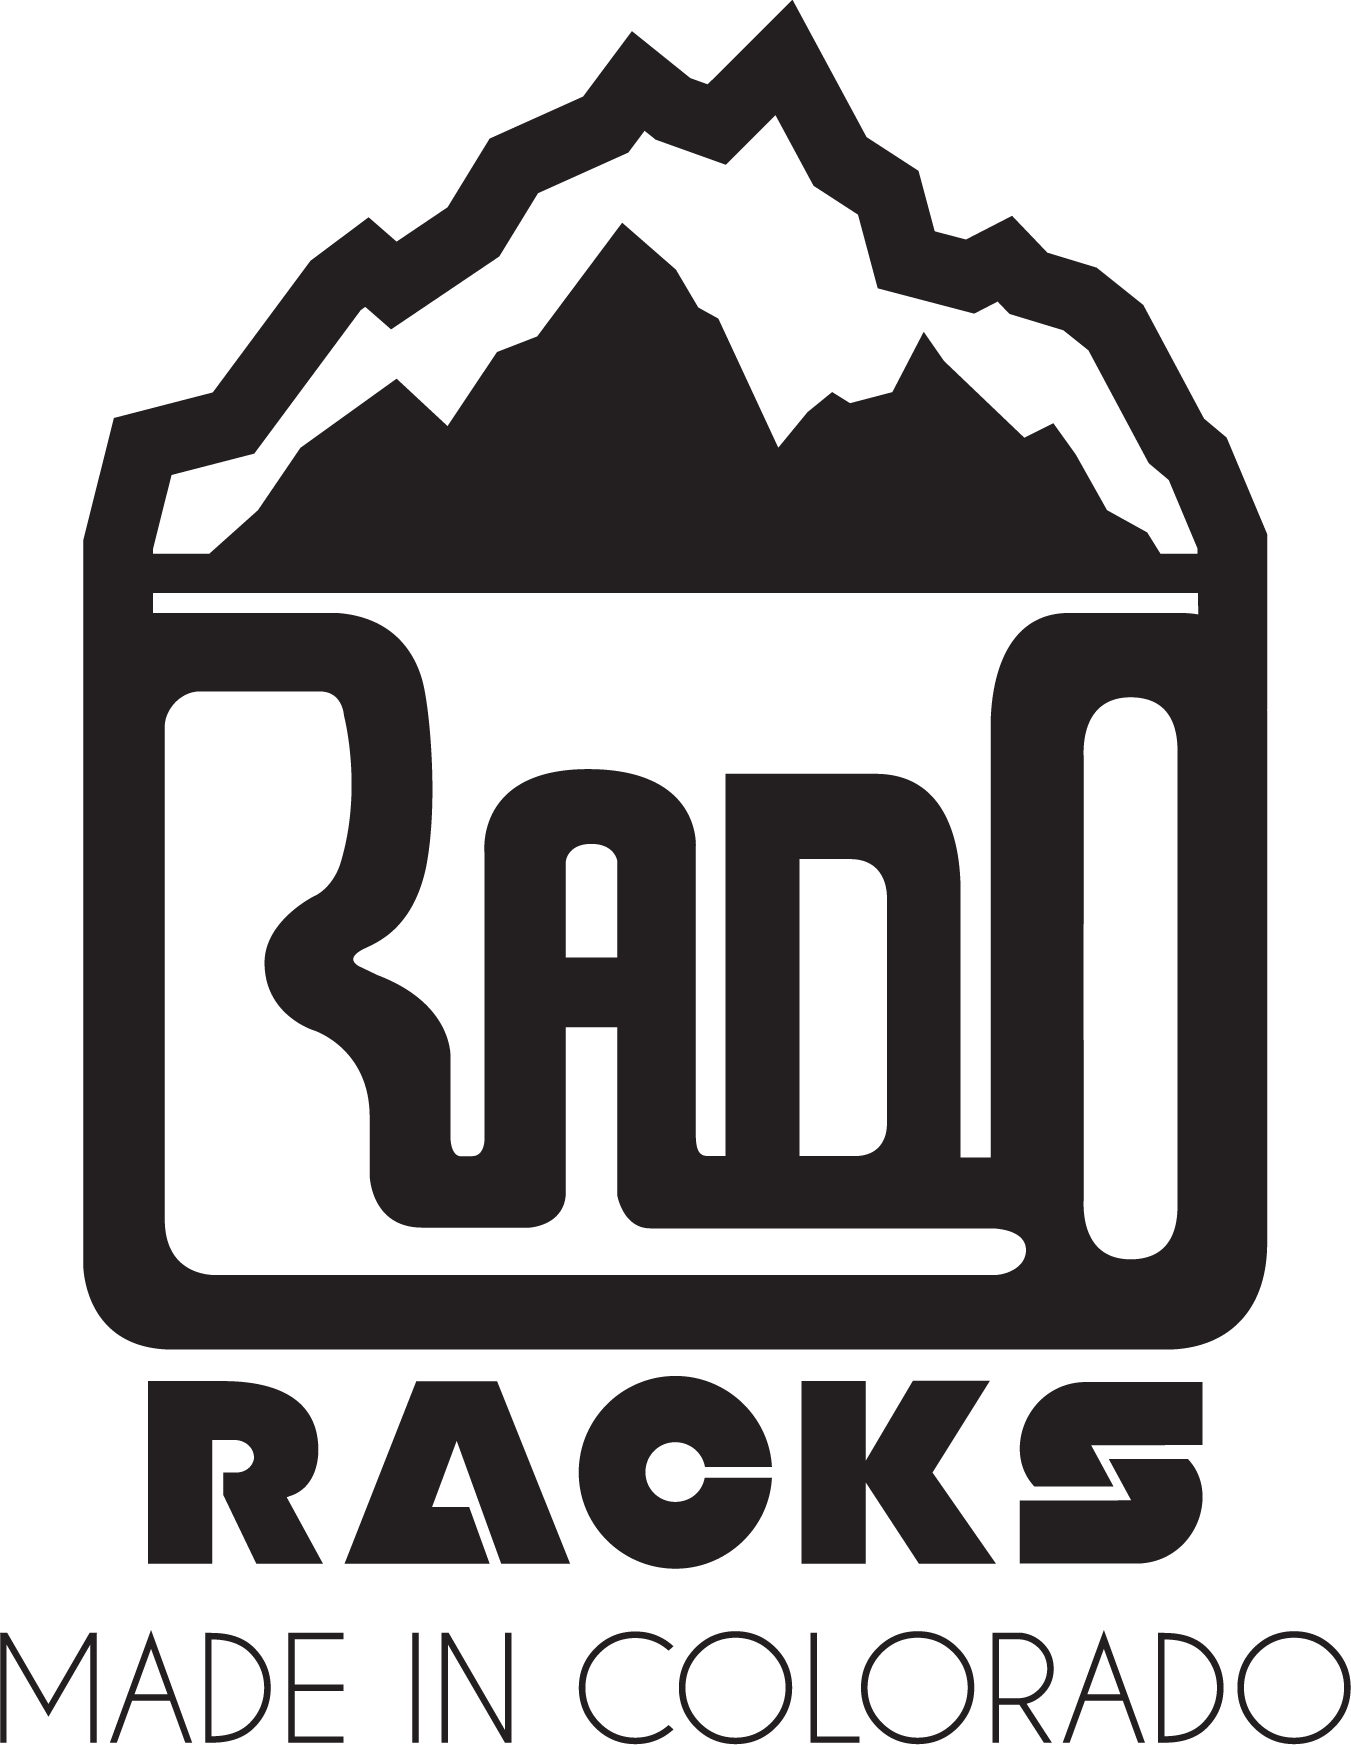 Rado Racks Support mural pour snowboard et ski -  France